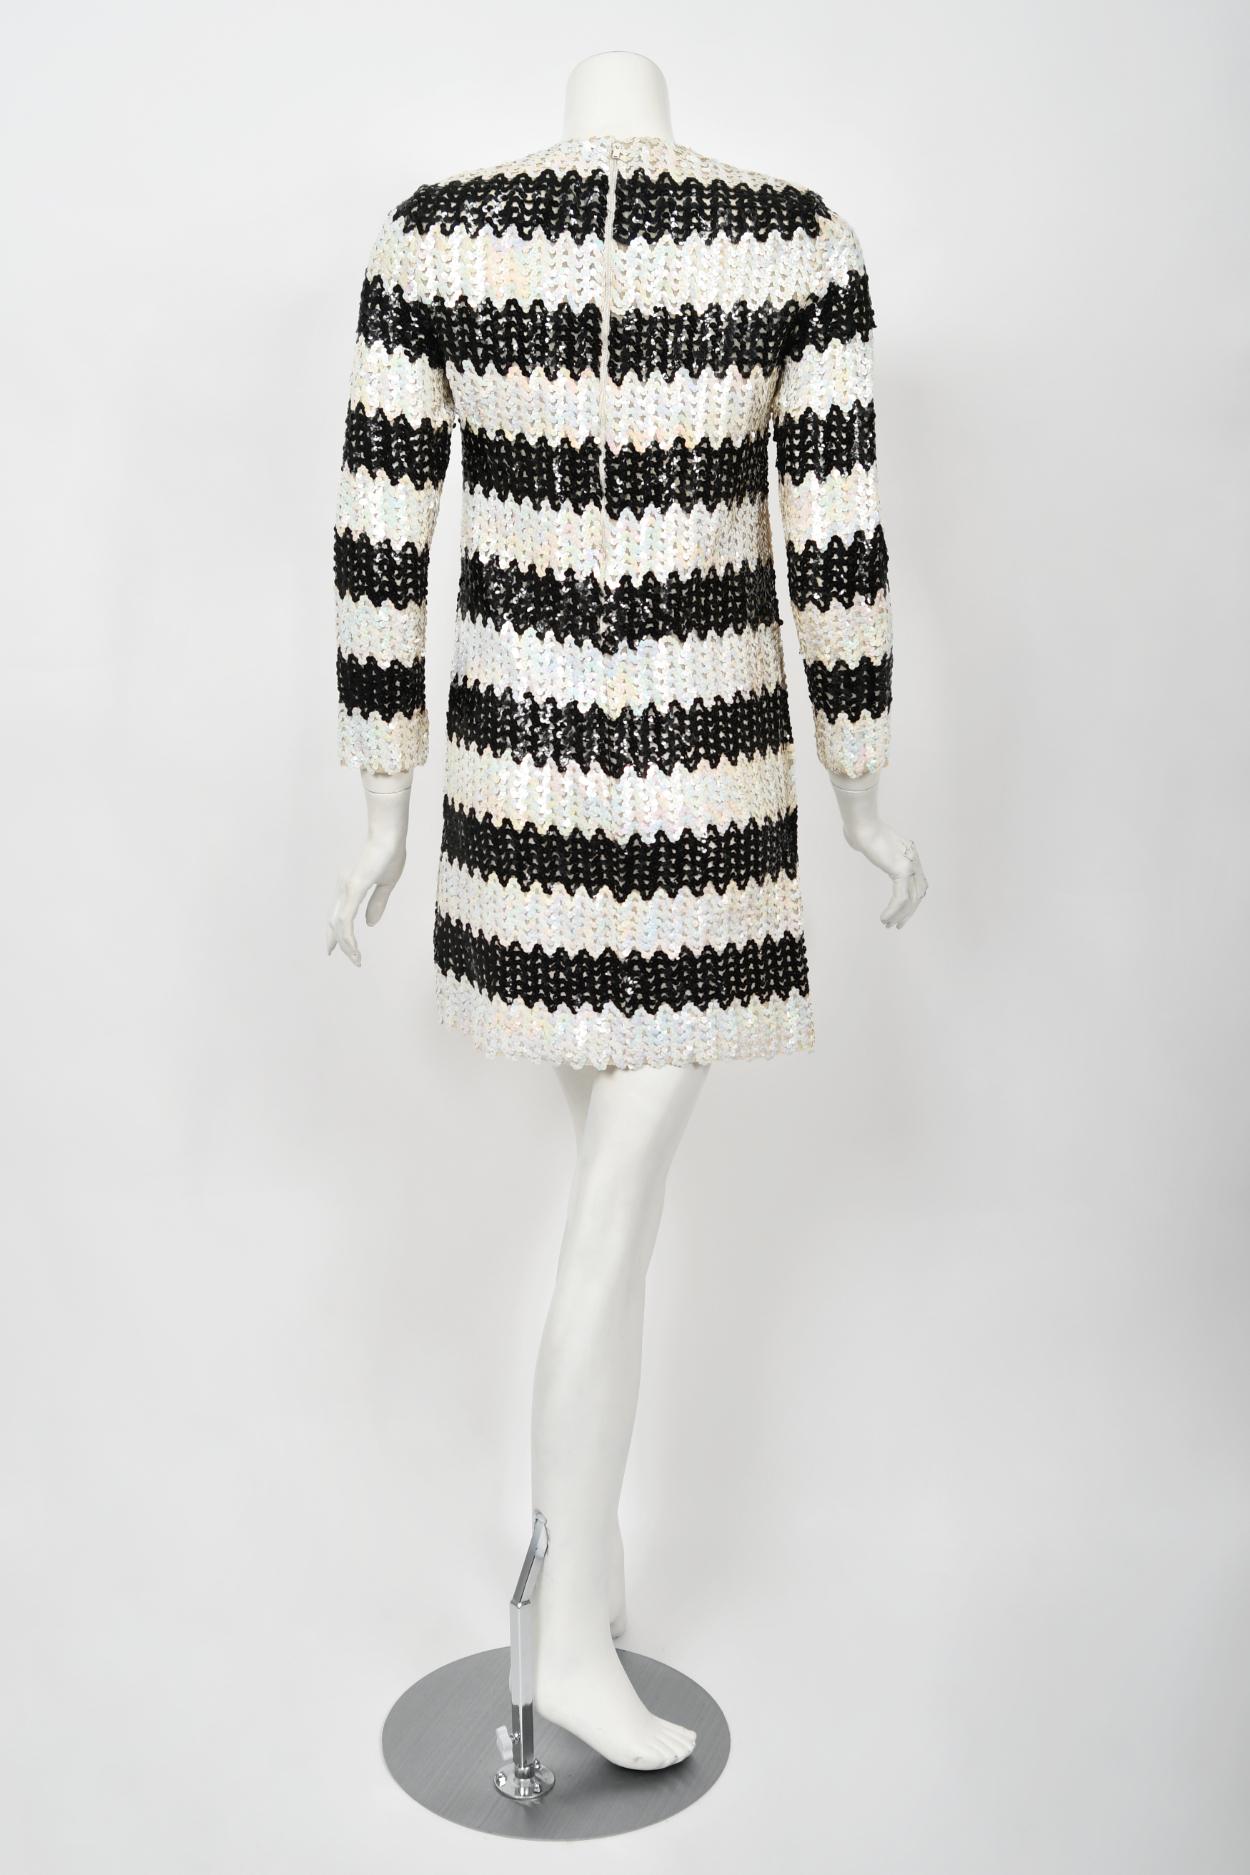 Vintage 1966 Betsey Johnson for Paraphernalia Documented Sequin Mod Mini Dress For Sale 12